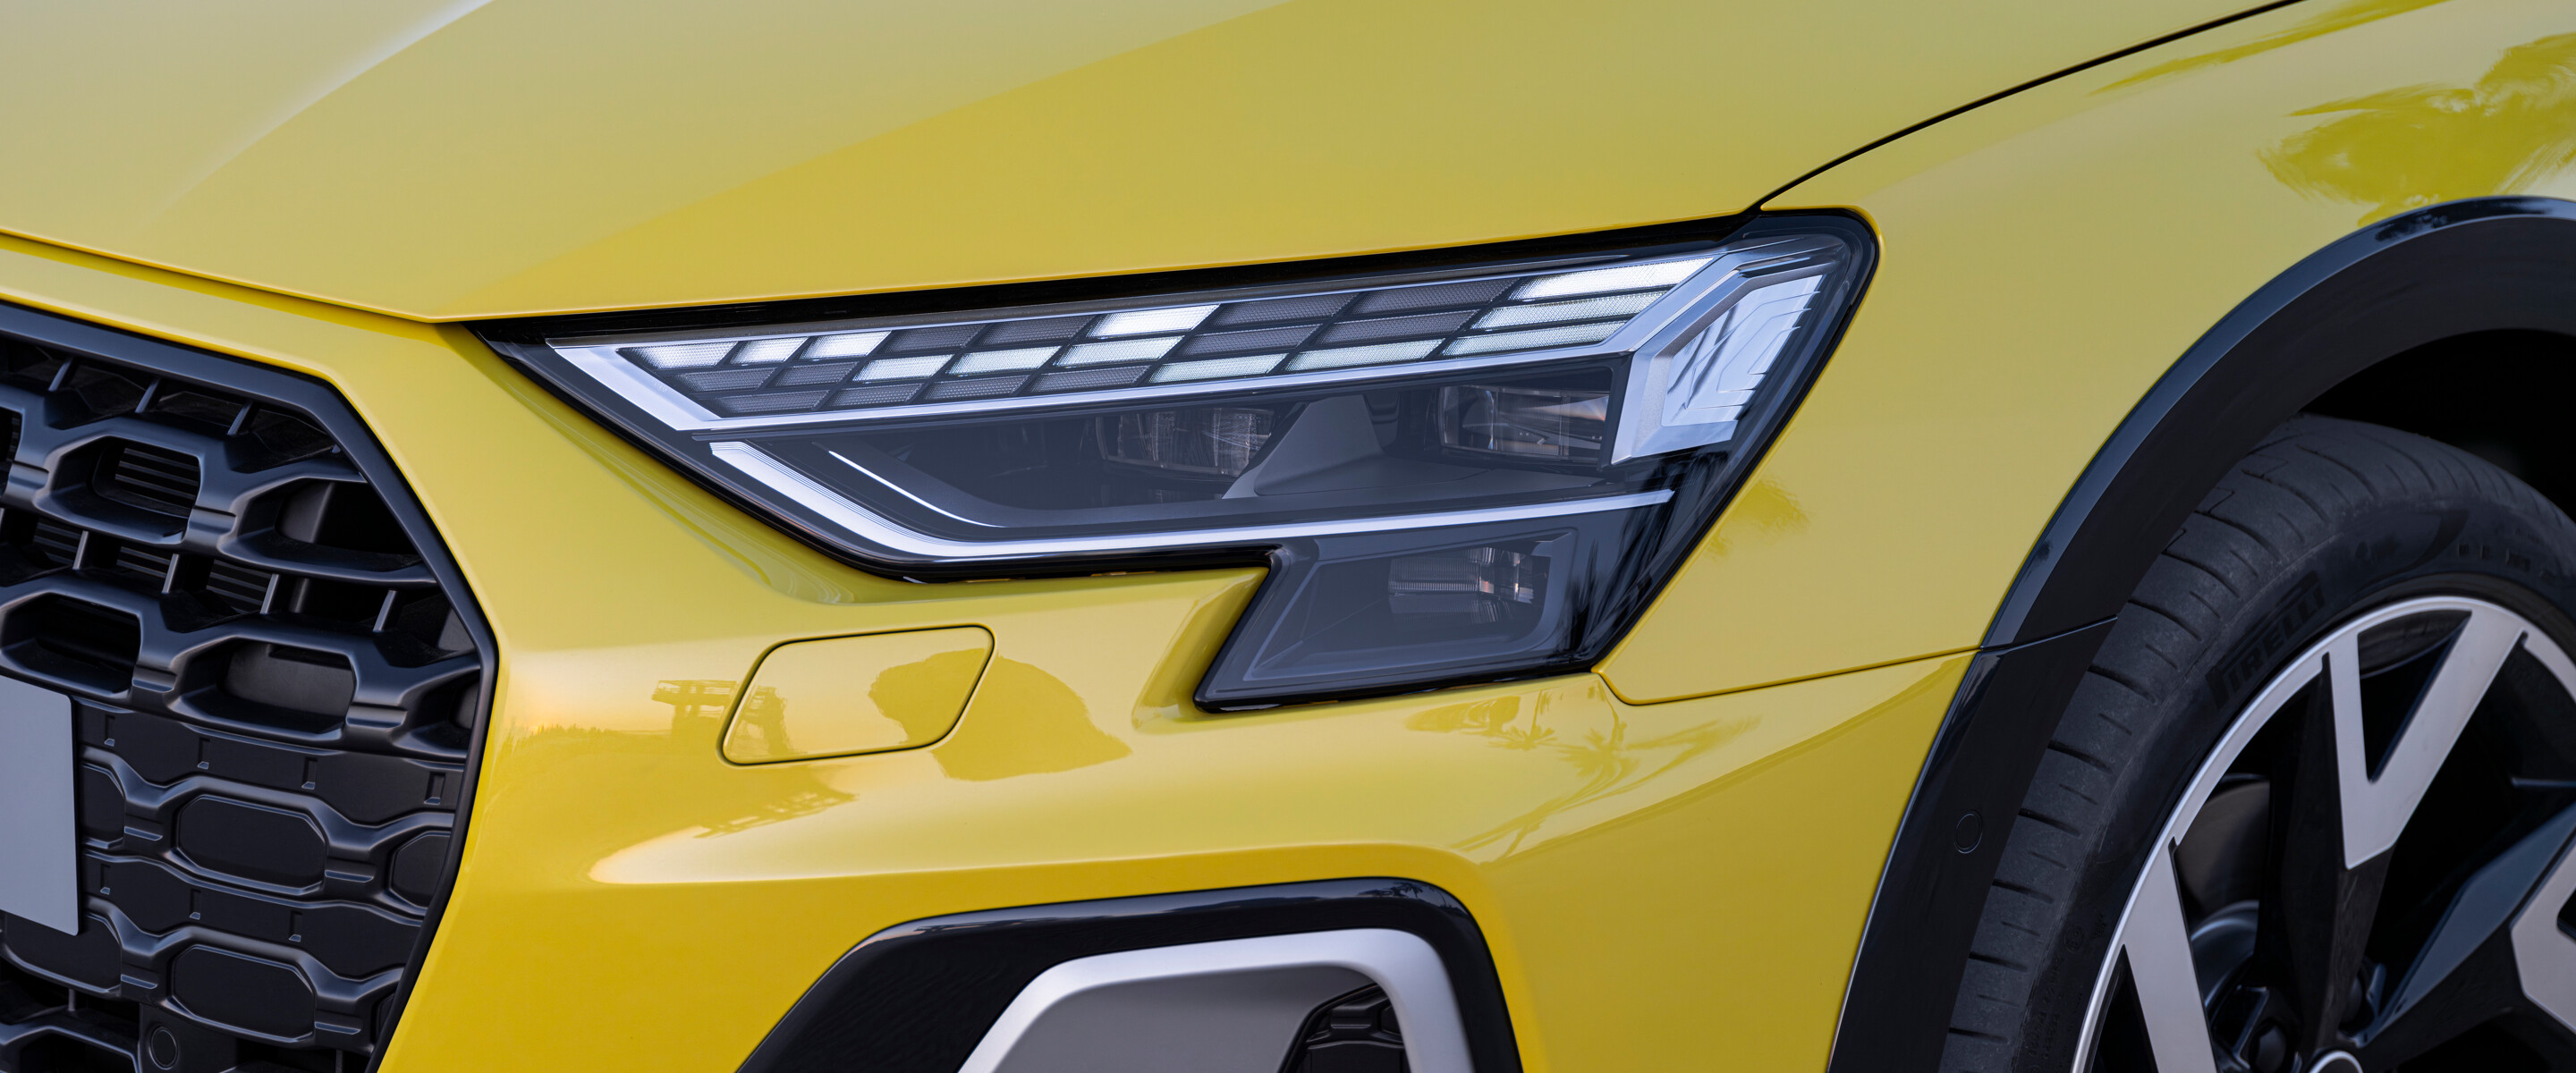 Audi A3 allstreet yellow (5)